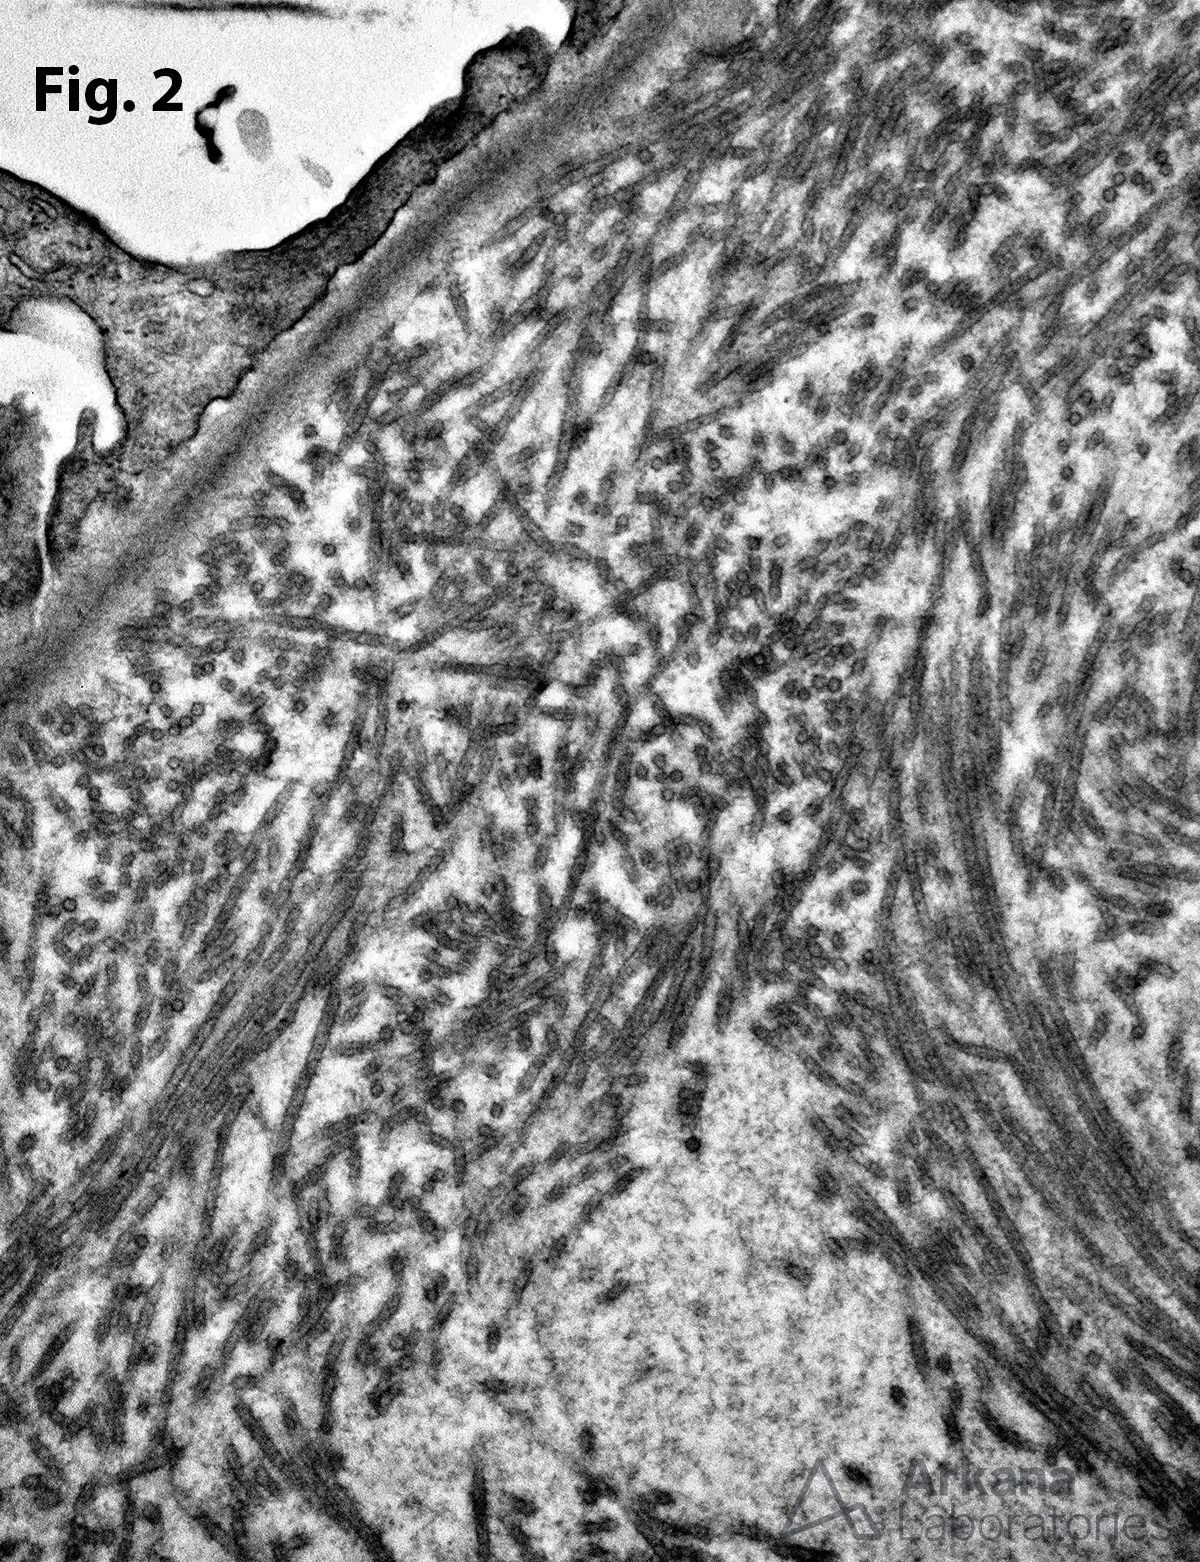 Immunotactoid Glomerulopathy, microtubule deposits seen by electron microscopy